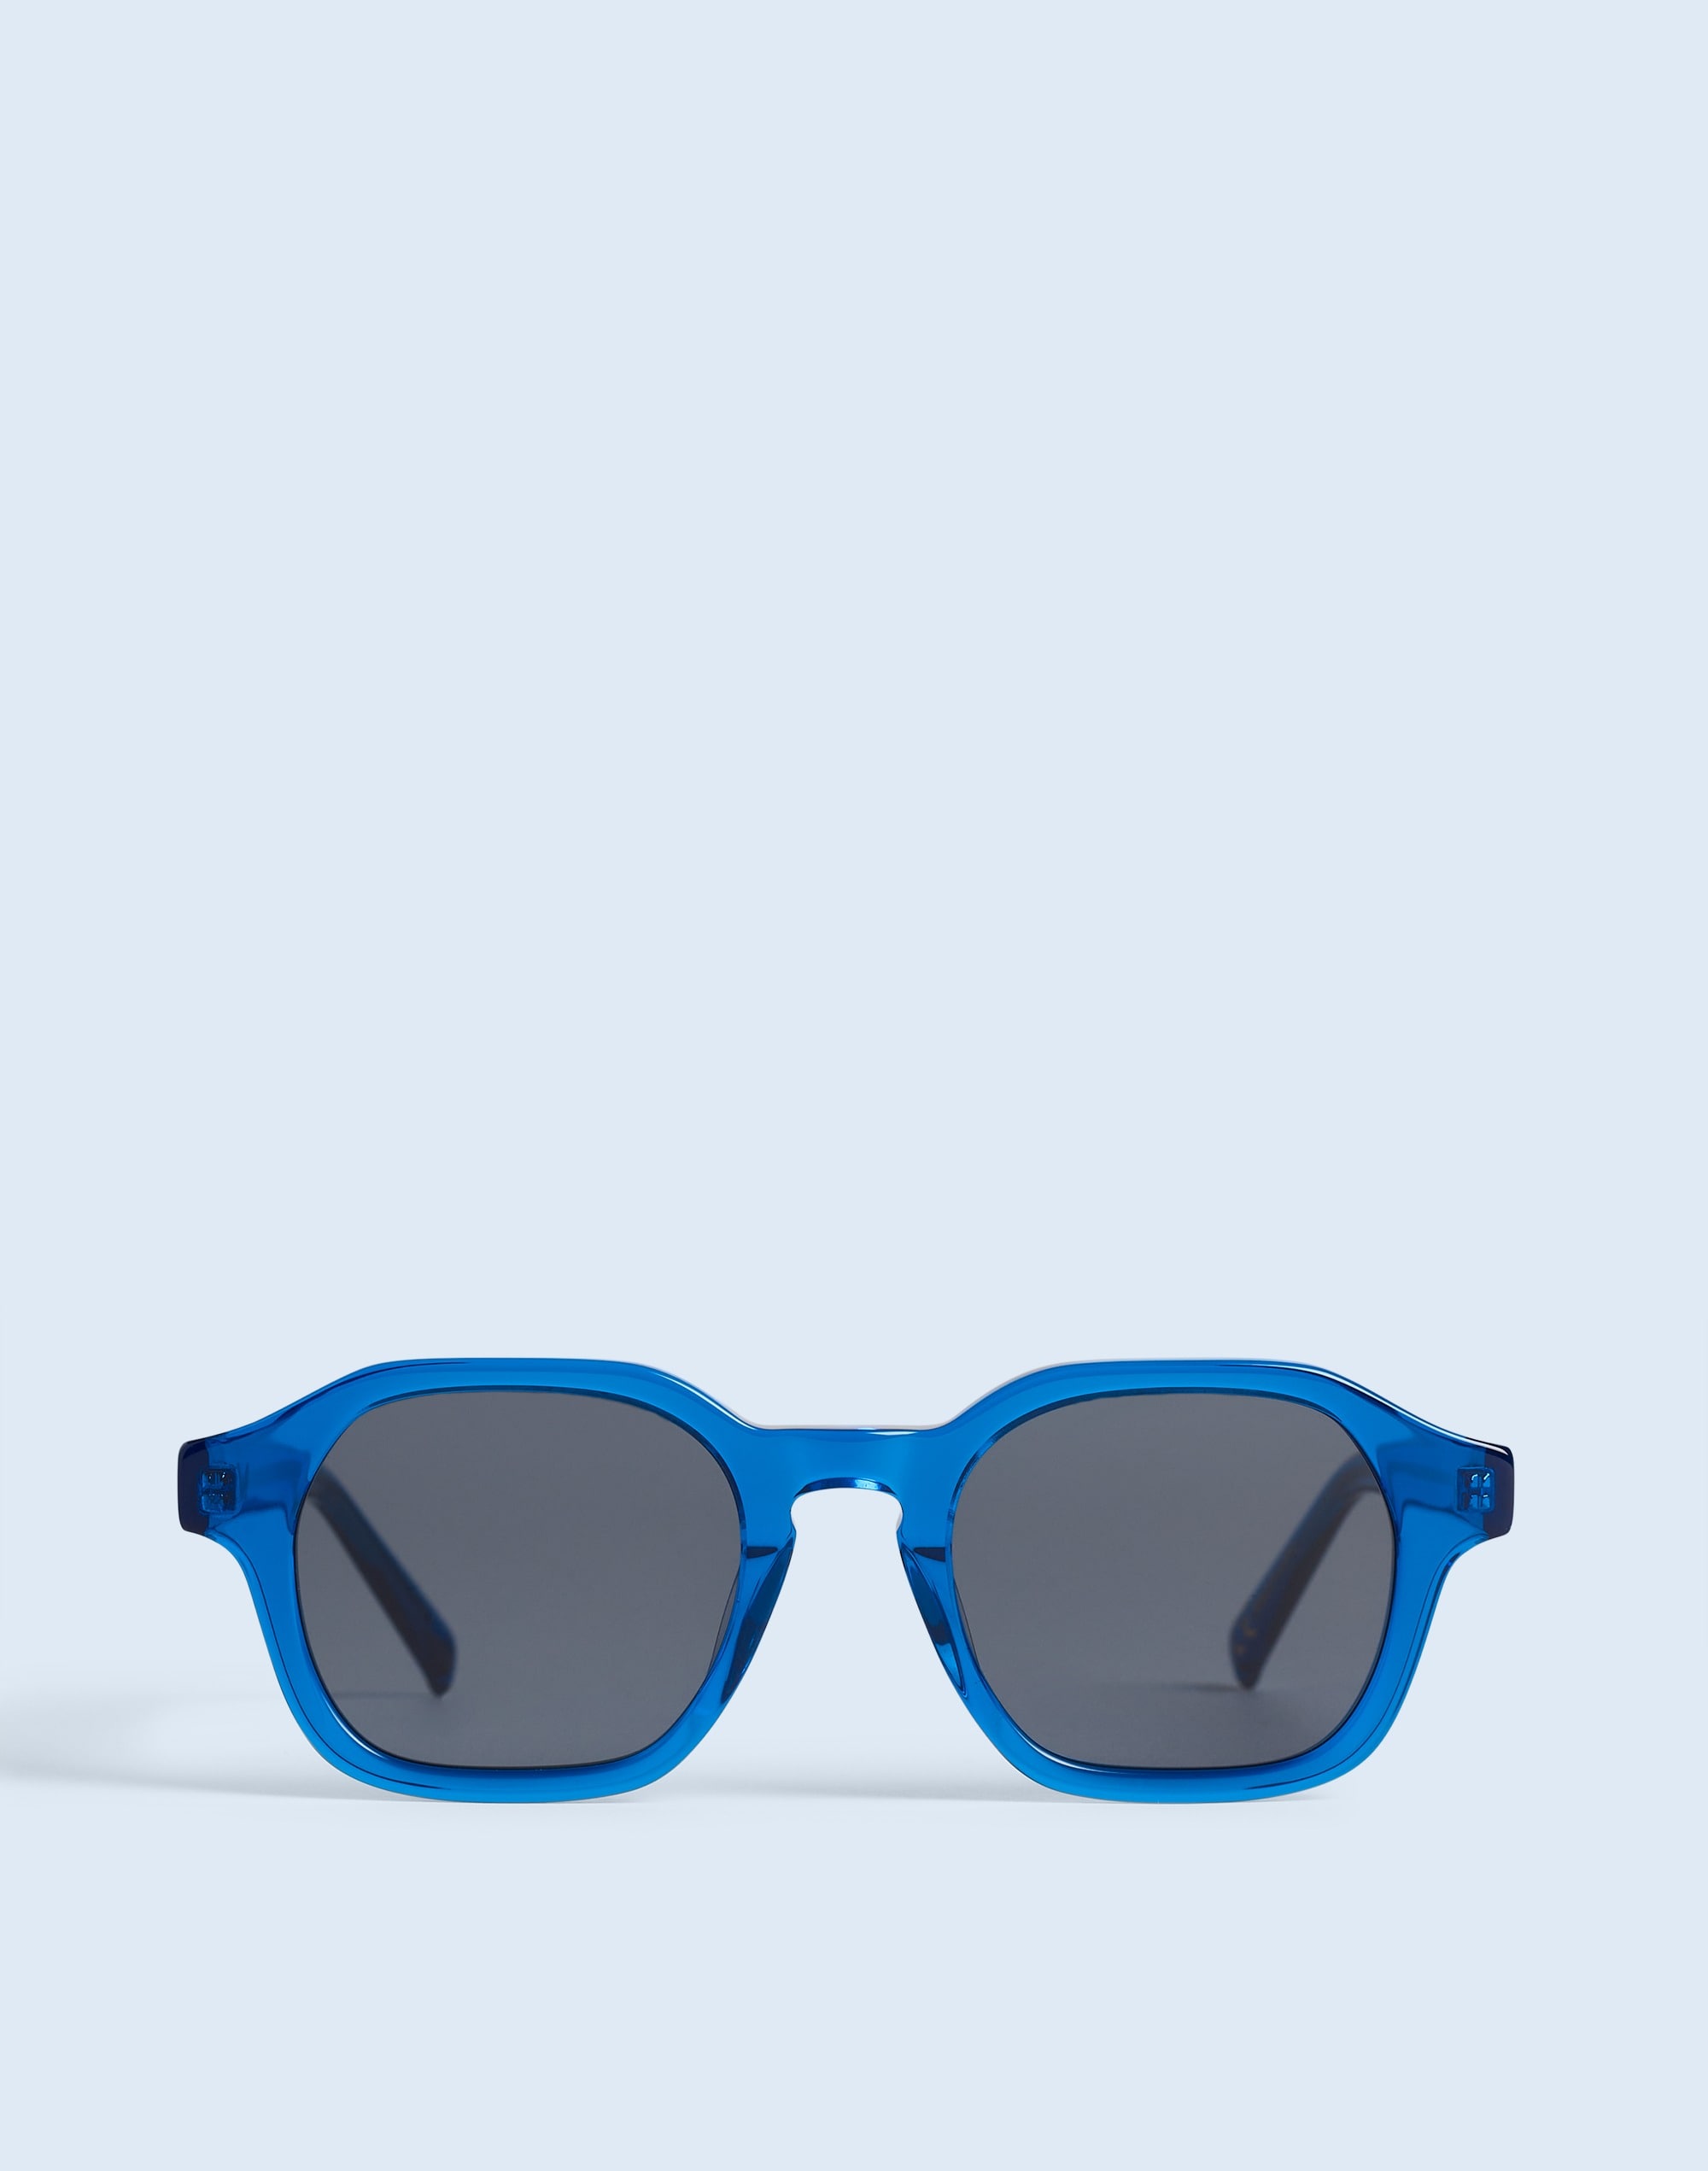 Mw Graphton Acetate Sunglasses In Blue